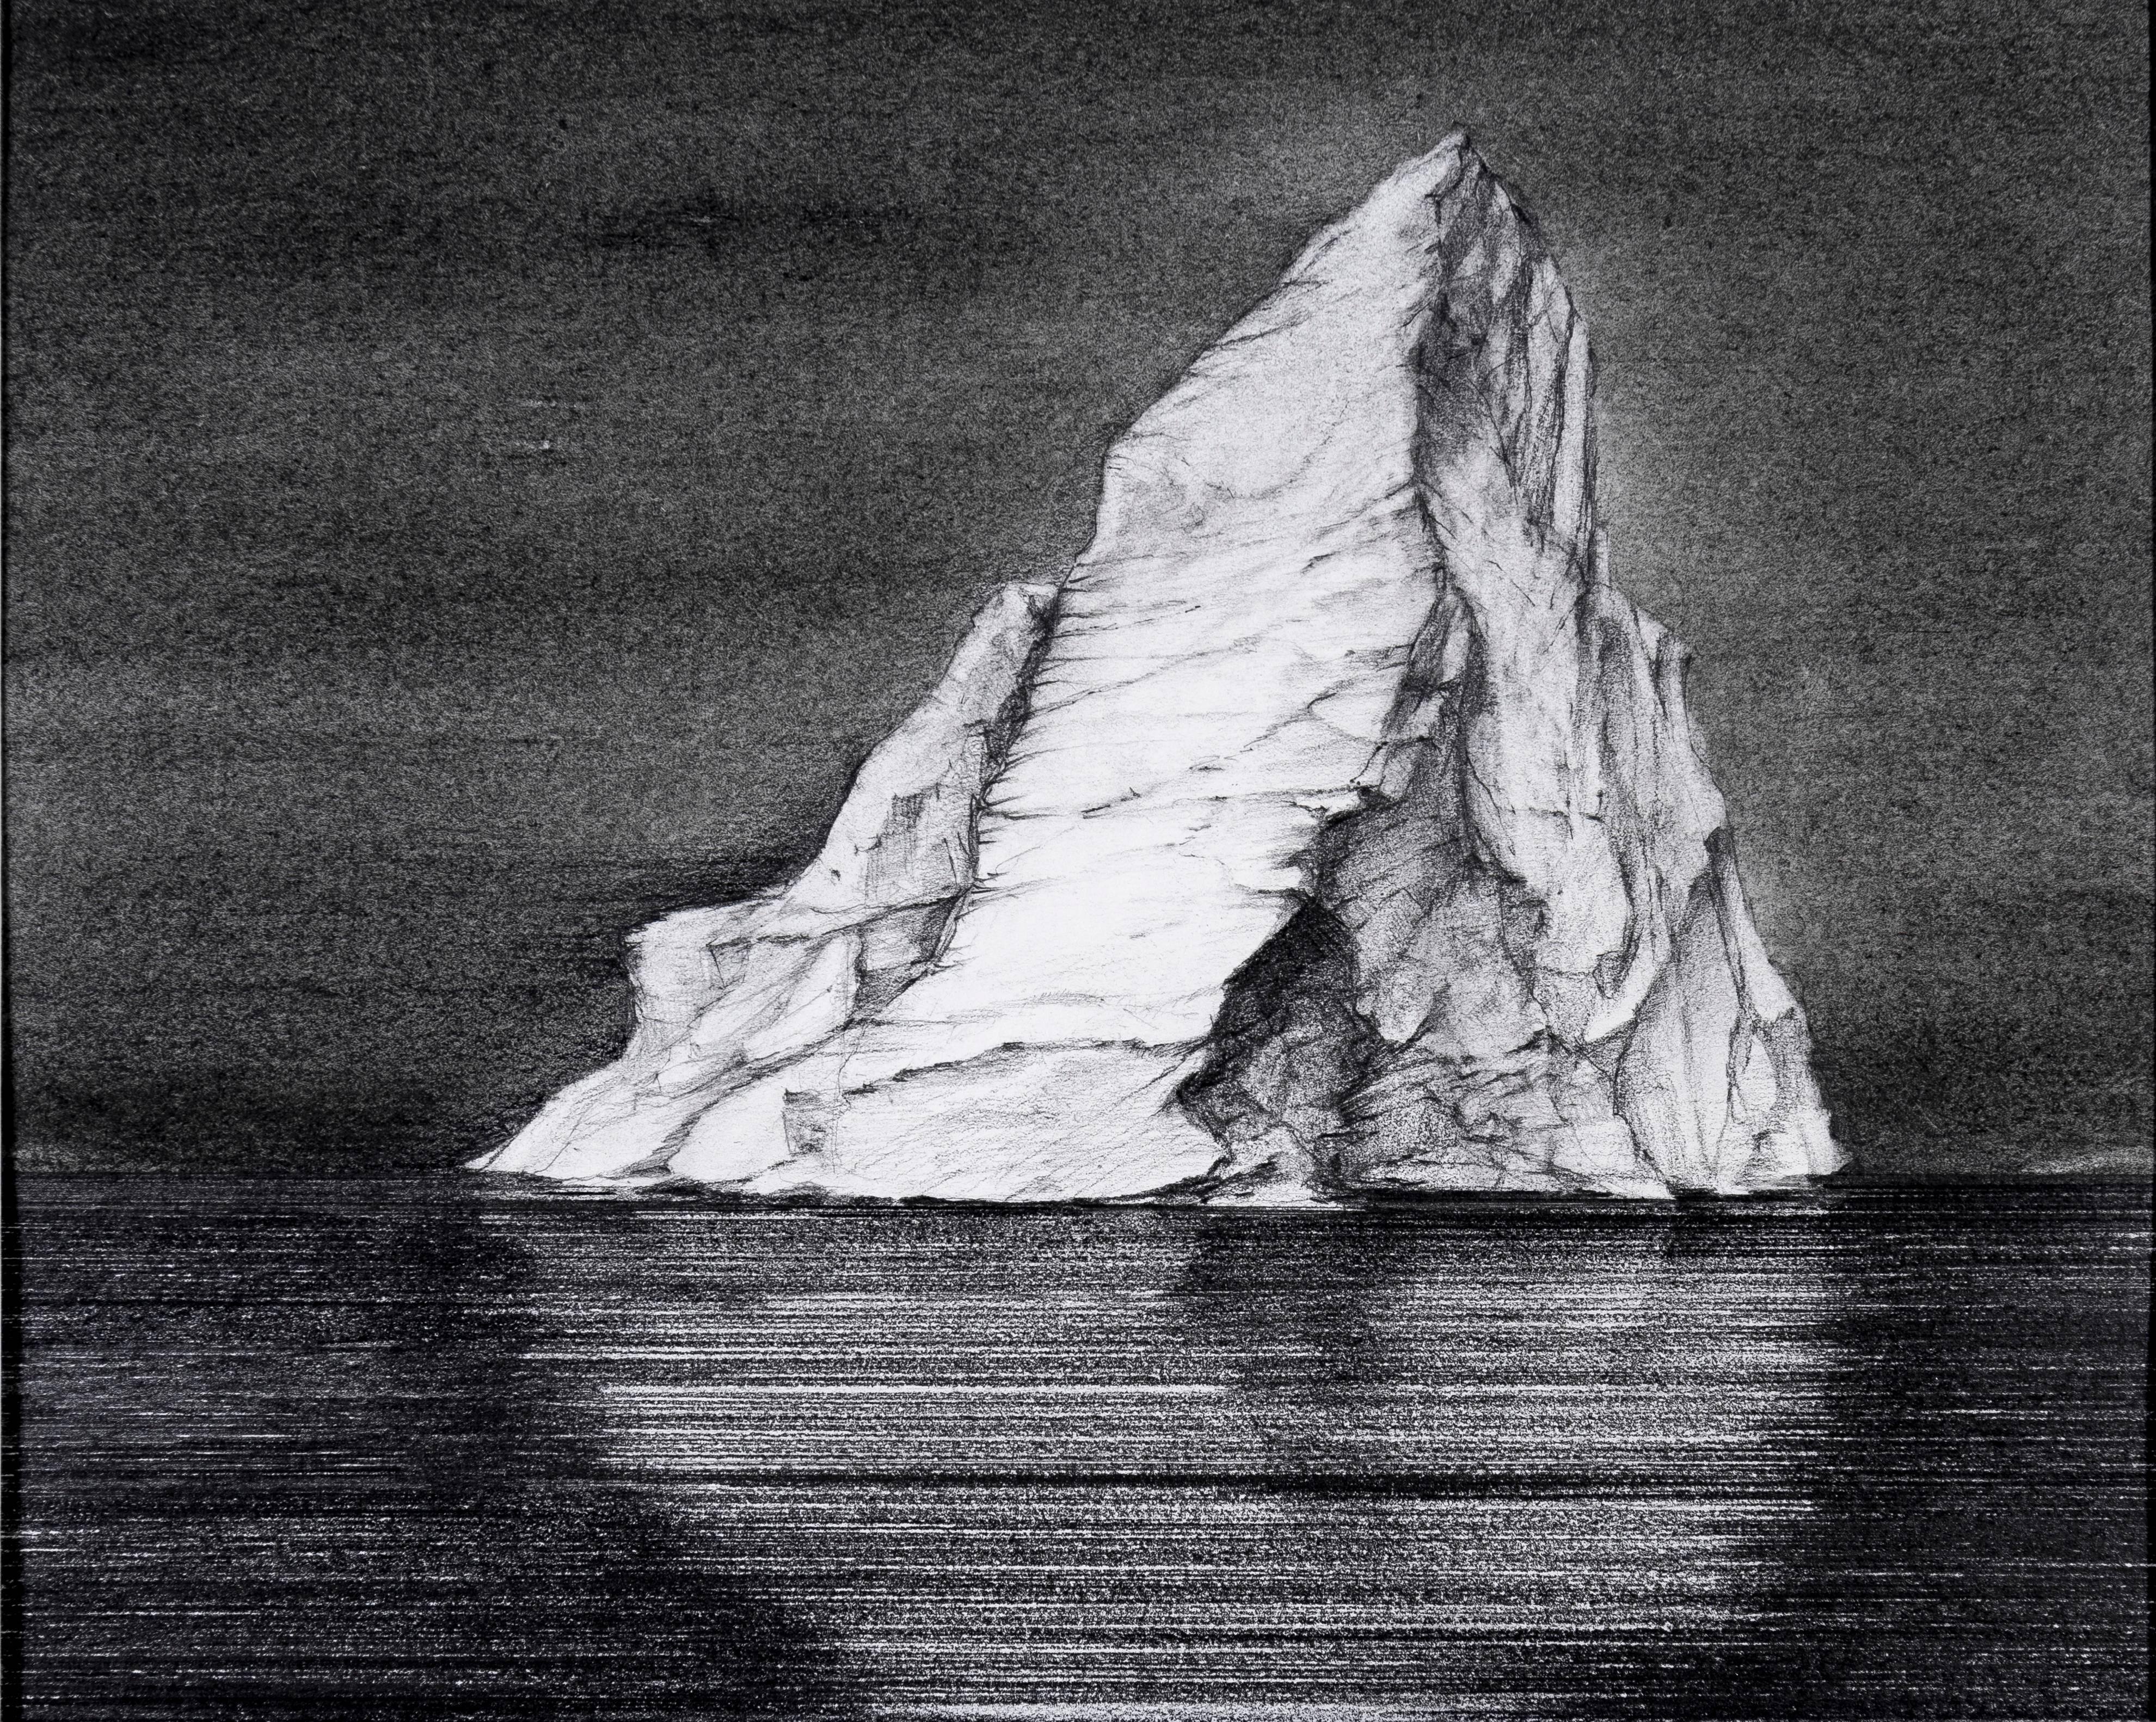 Juan Garcia-Nunez Landscape Art - Iceberg Drawing 4: Black and White Landscape Drawing of Iceberg in Water, Framed